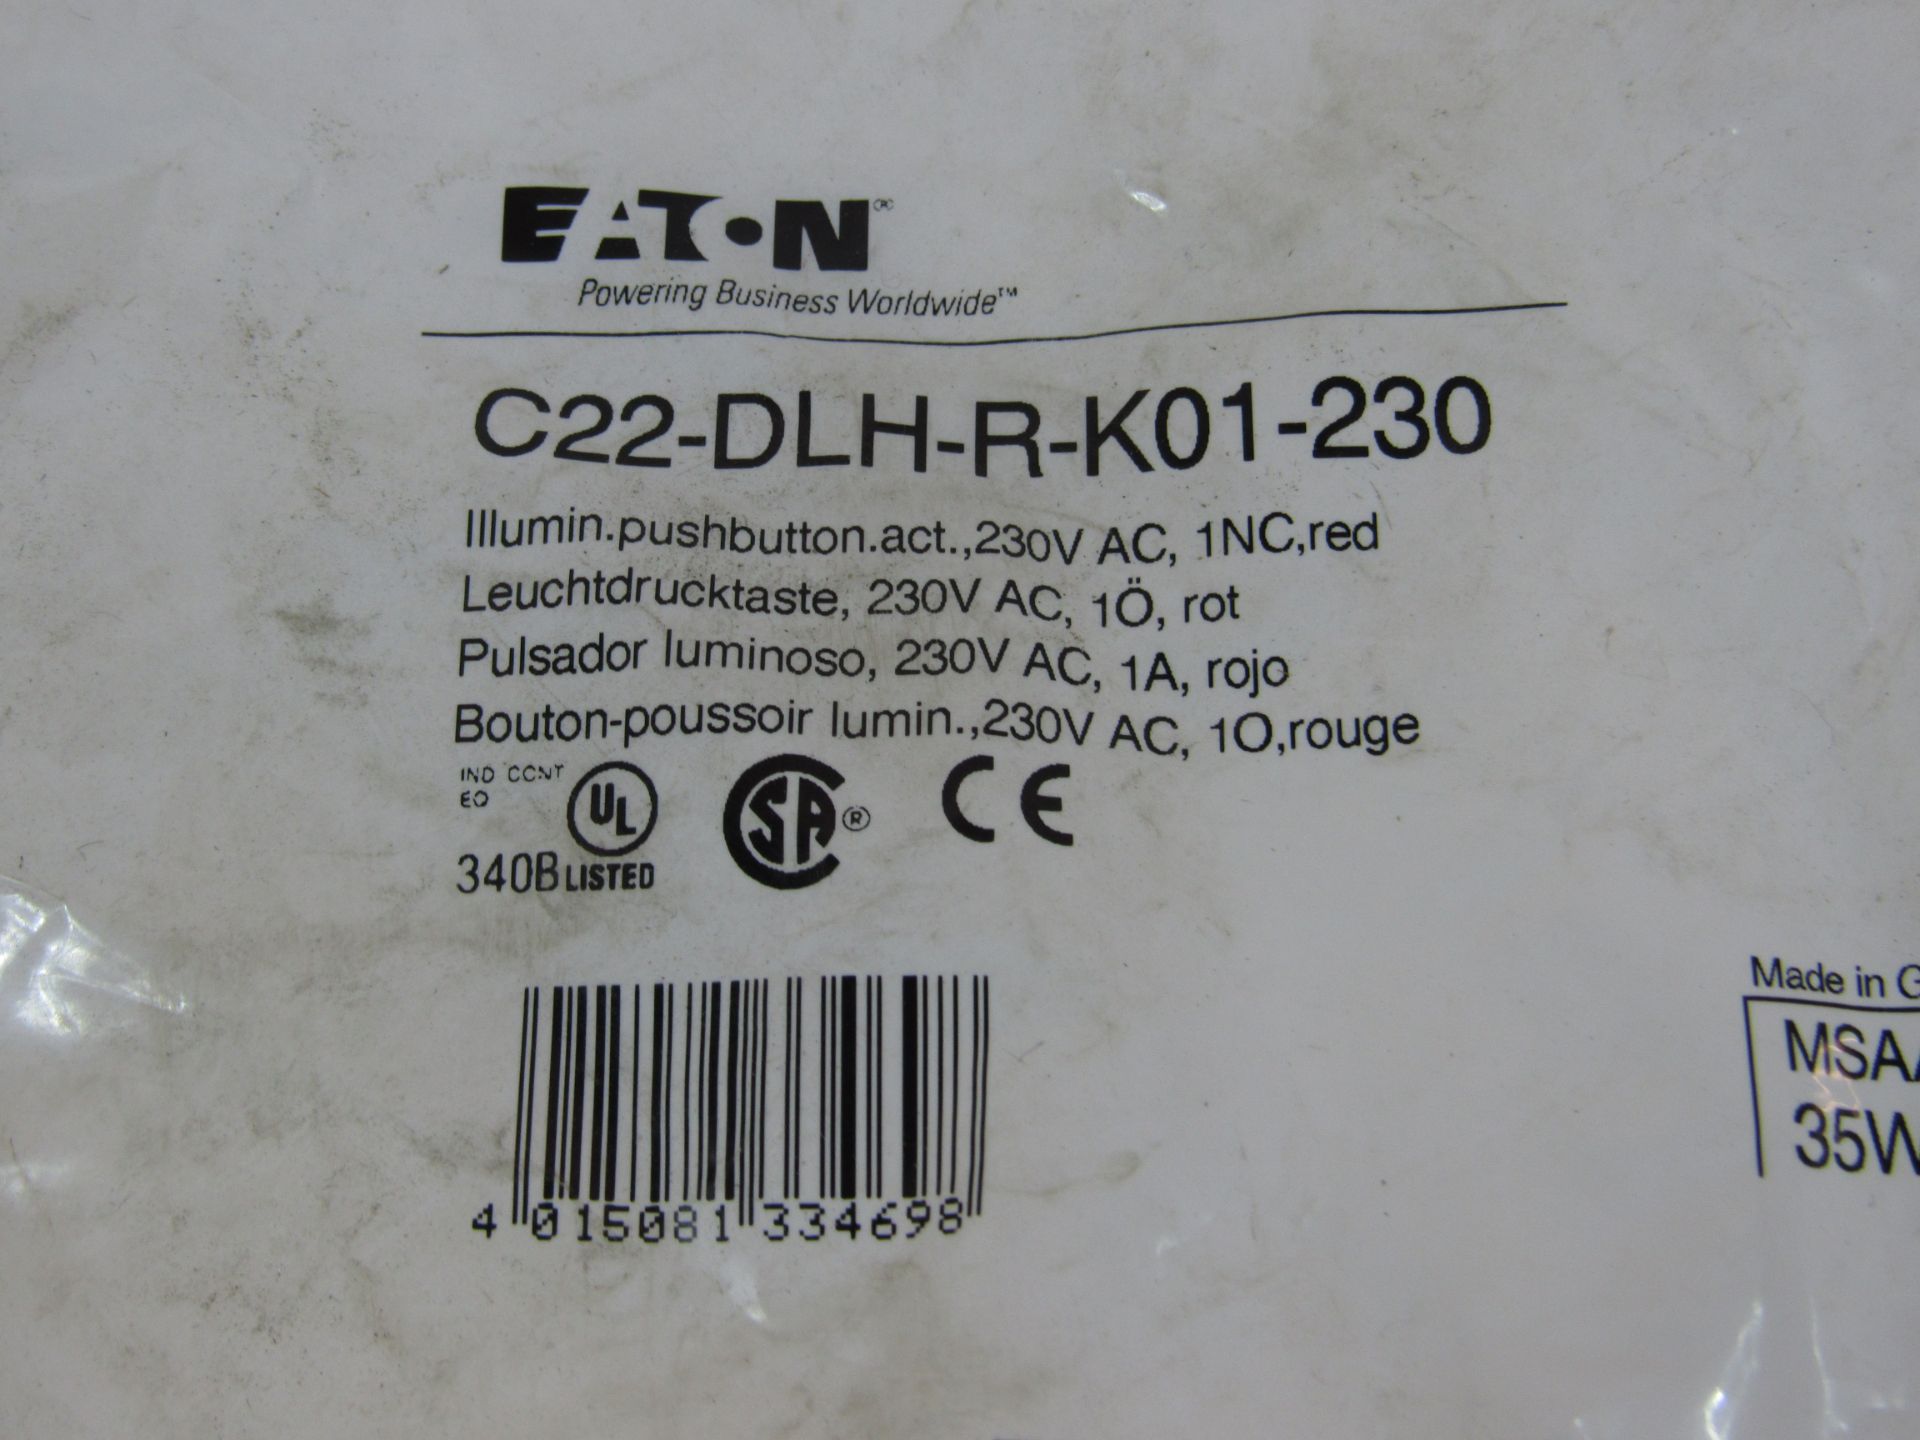 25x Eaton C22-DLH-R-K01-230 Pushbuttons Illuminated 230V 1NC EA - Image 2 of 2